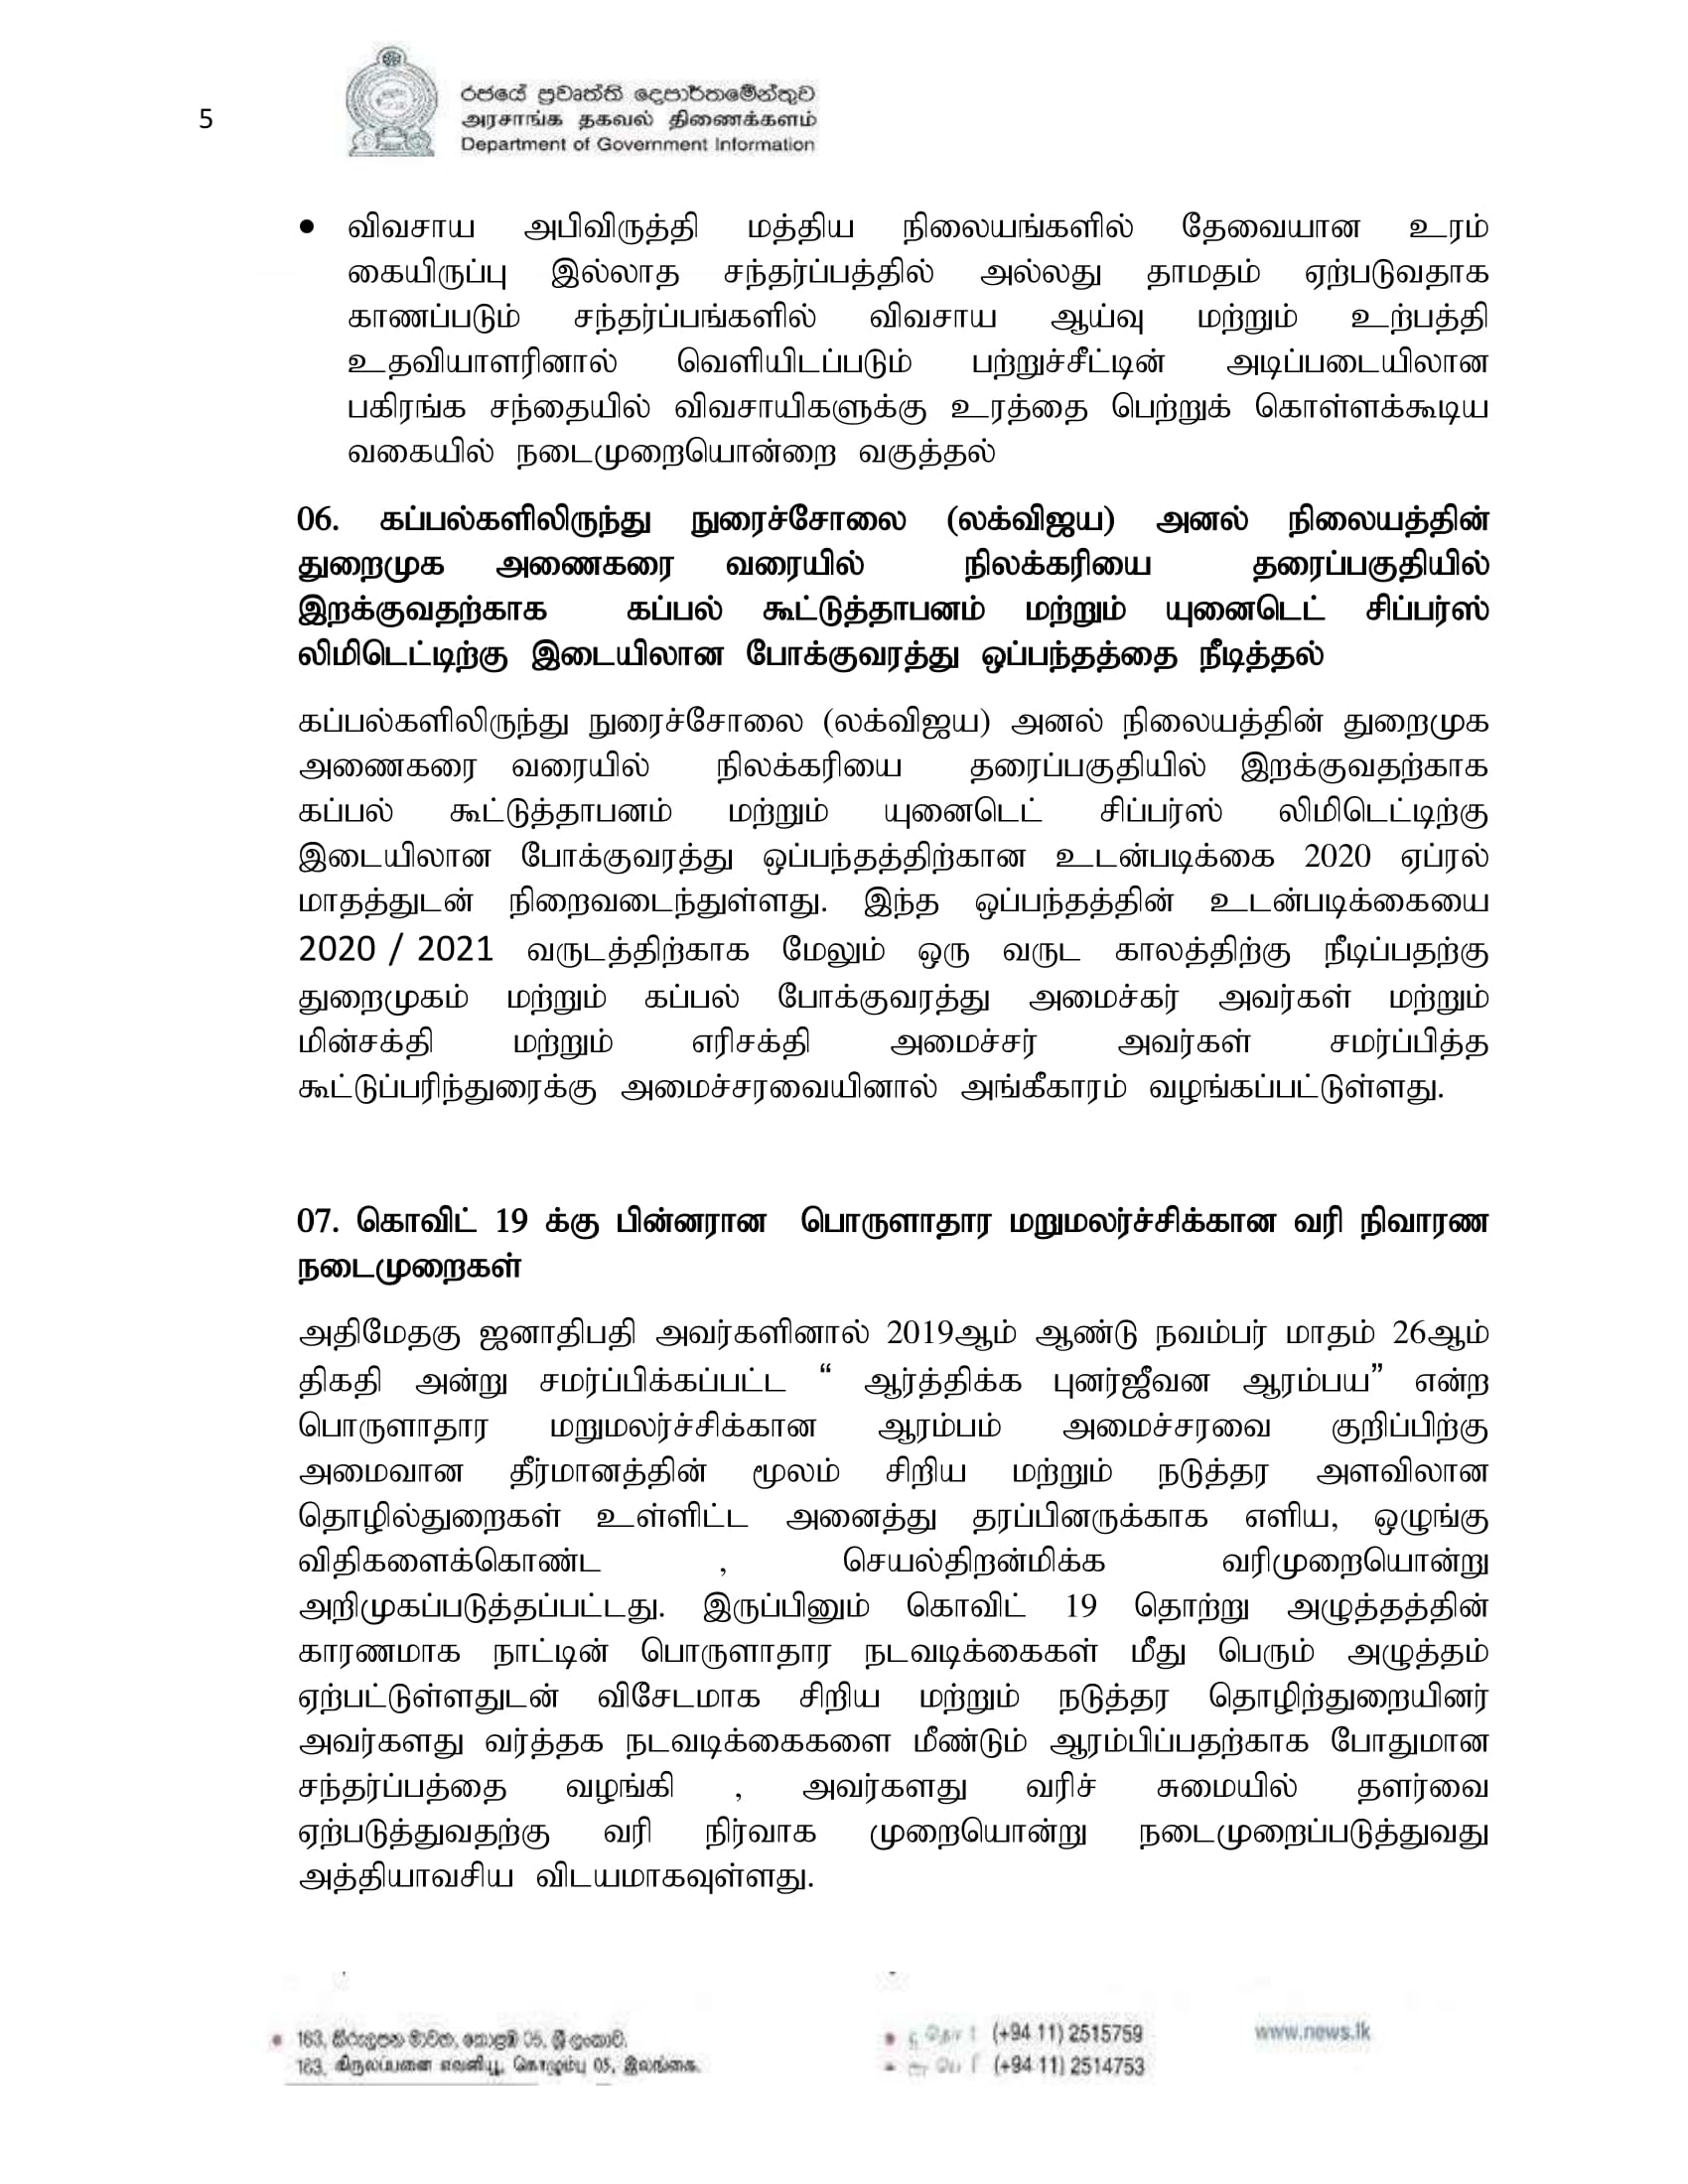 2020.06.24 Cabinet Tamil 1 1 5